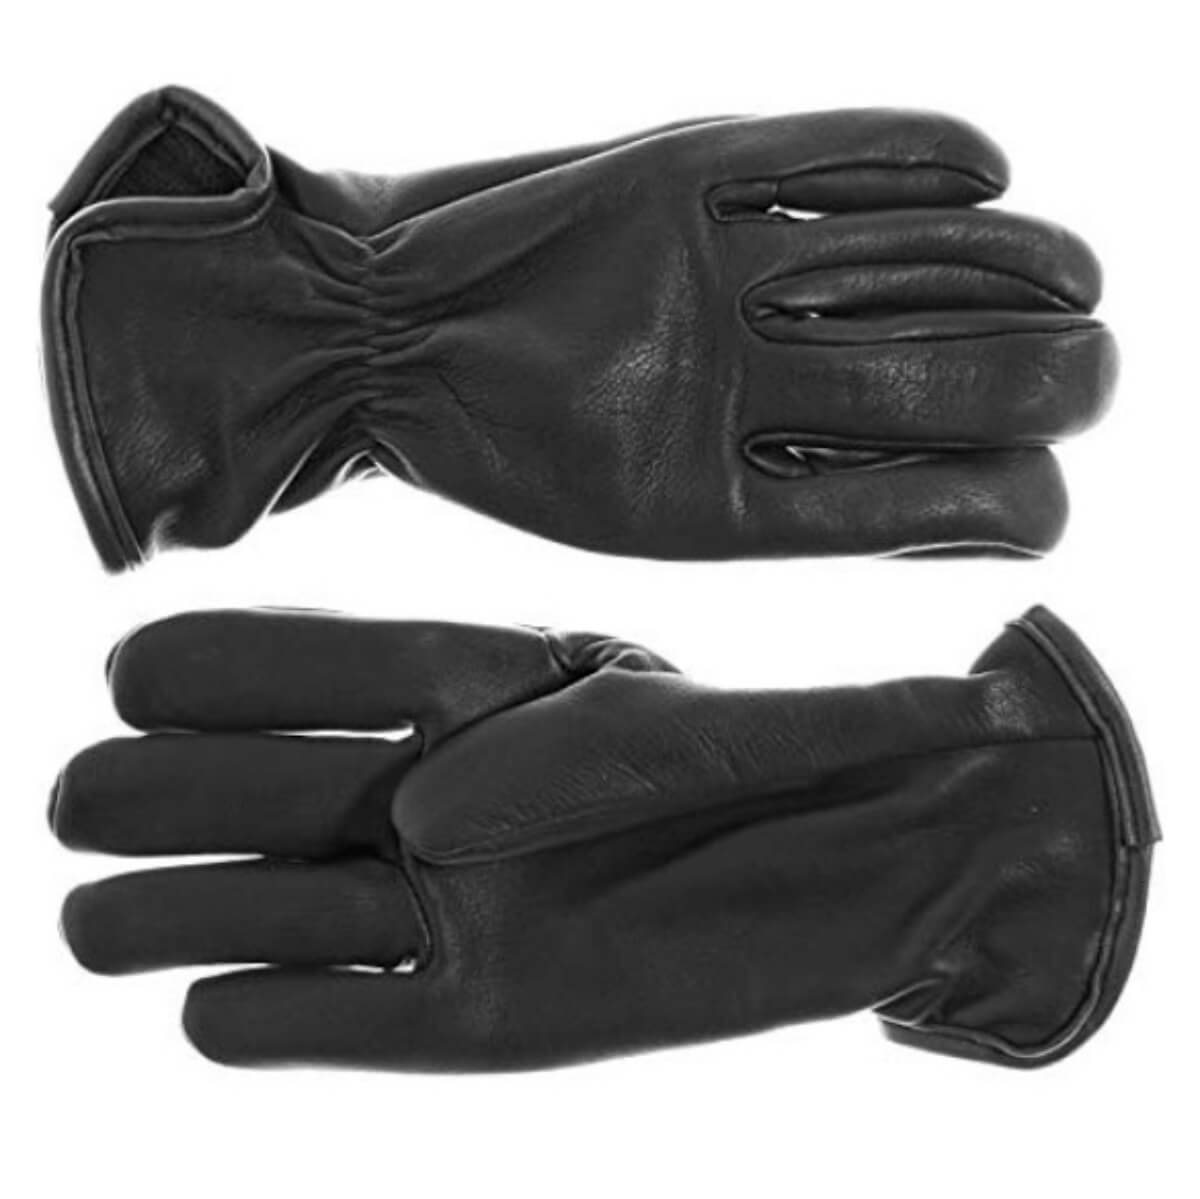 Geier buckskin gloves with merino wool lining